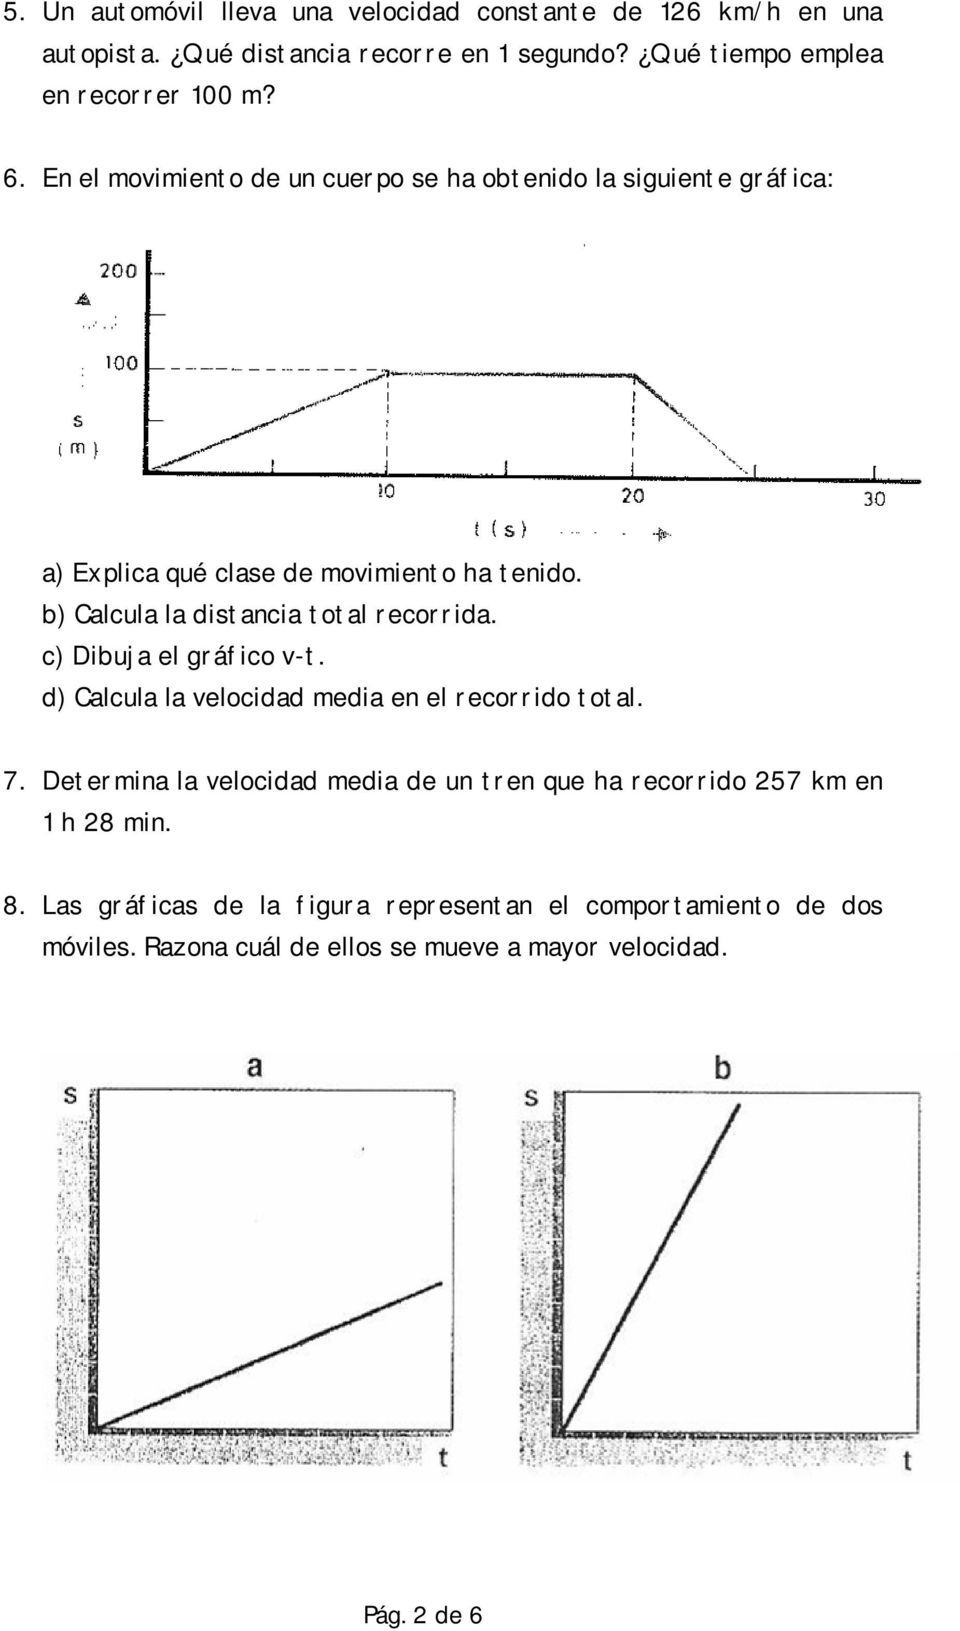 b) Calcula la distancia total recorrida. c) Dibuja el gráfico v-t. d) Calcula la velocidad media en el recorrido total. 7.